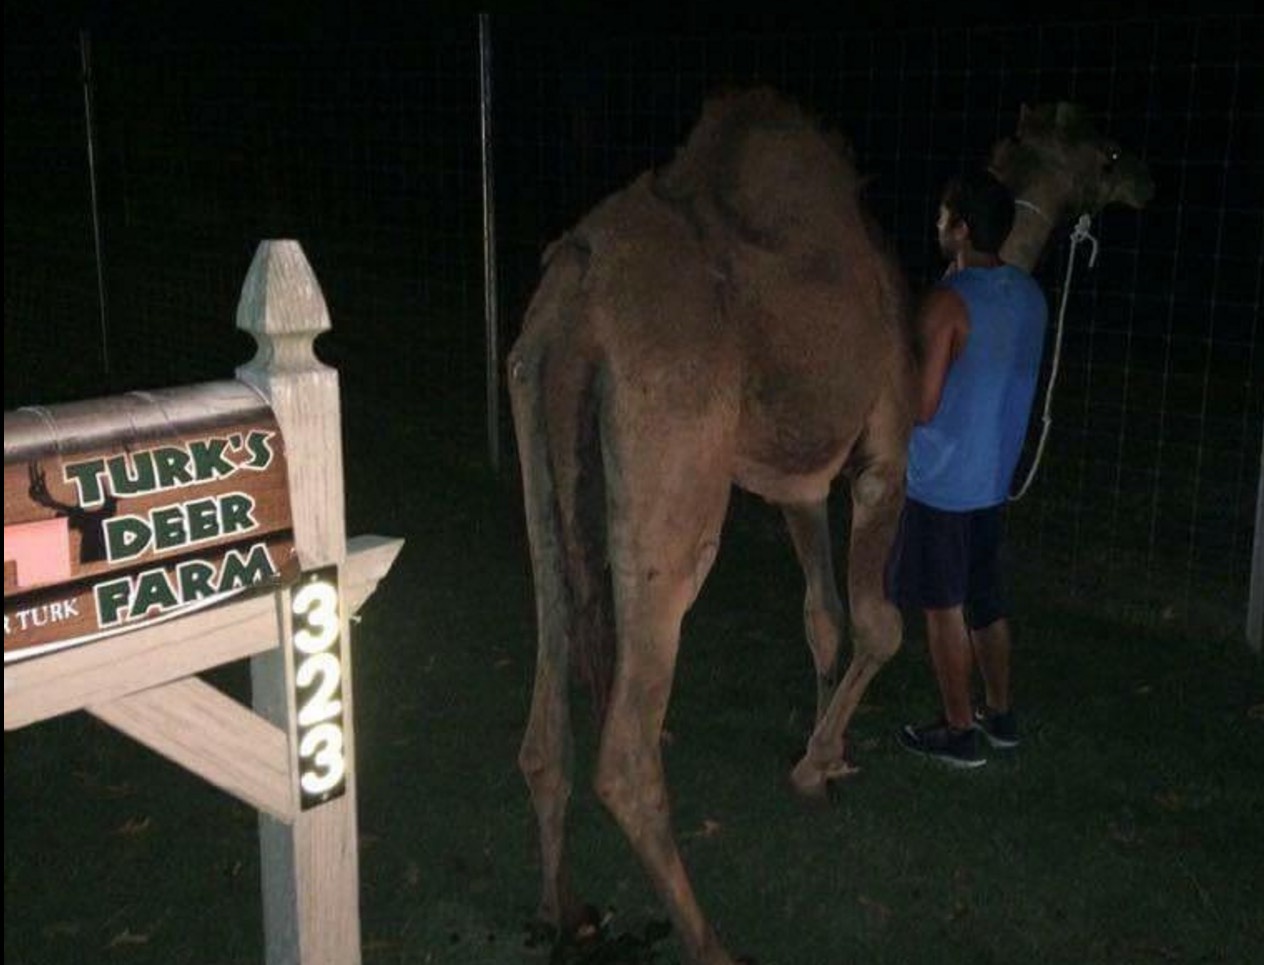 Teen driver, Camel collide far from desert on Alabama road (Watch)